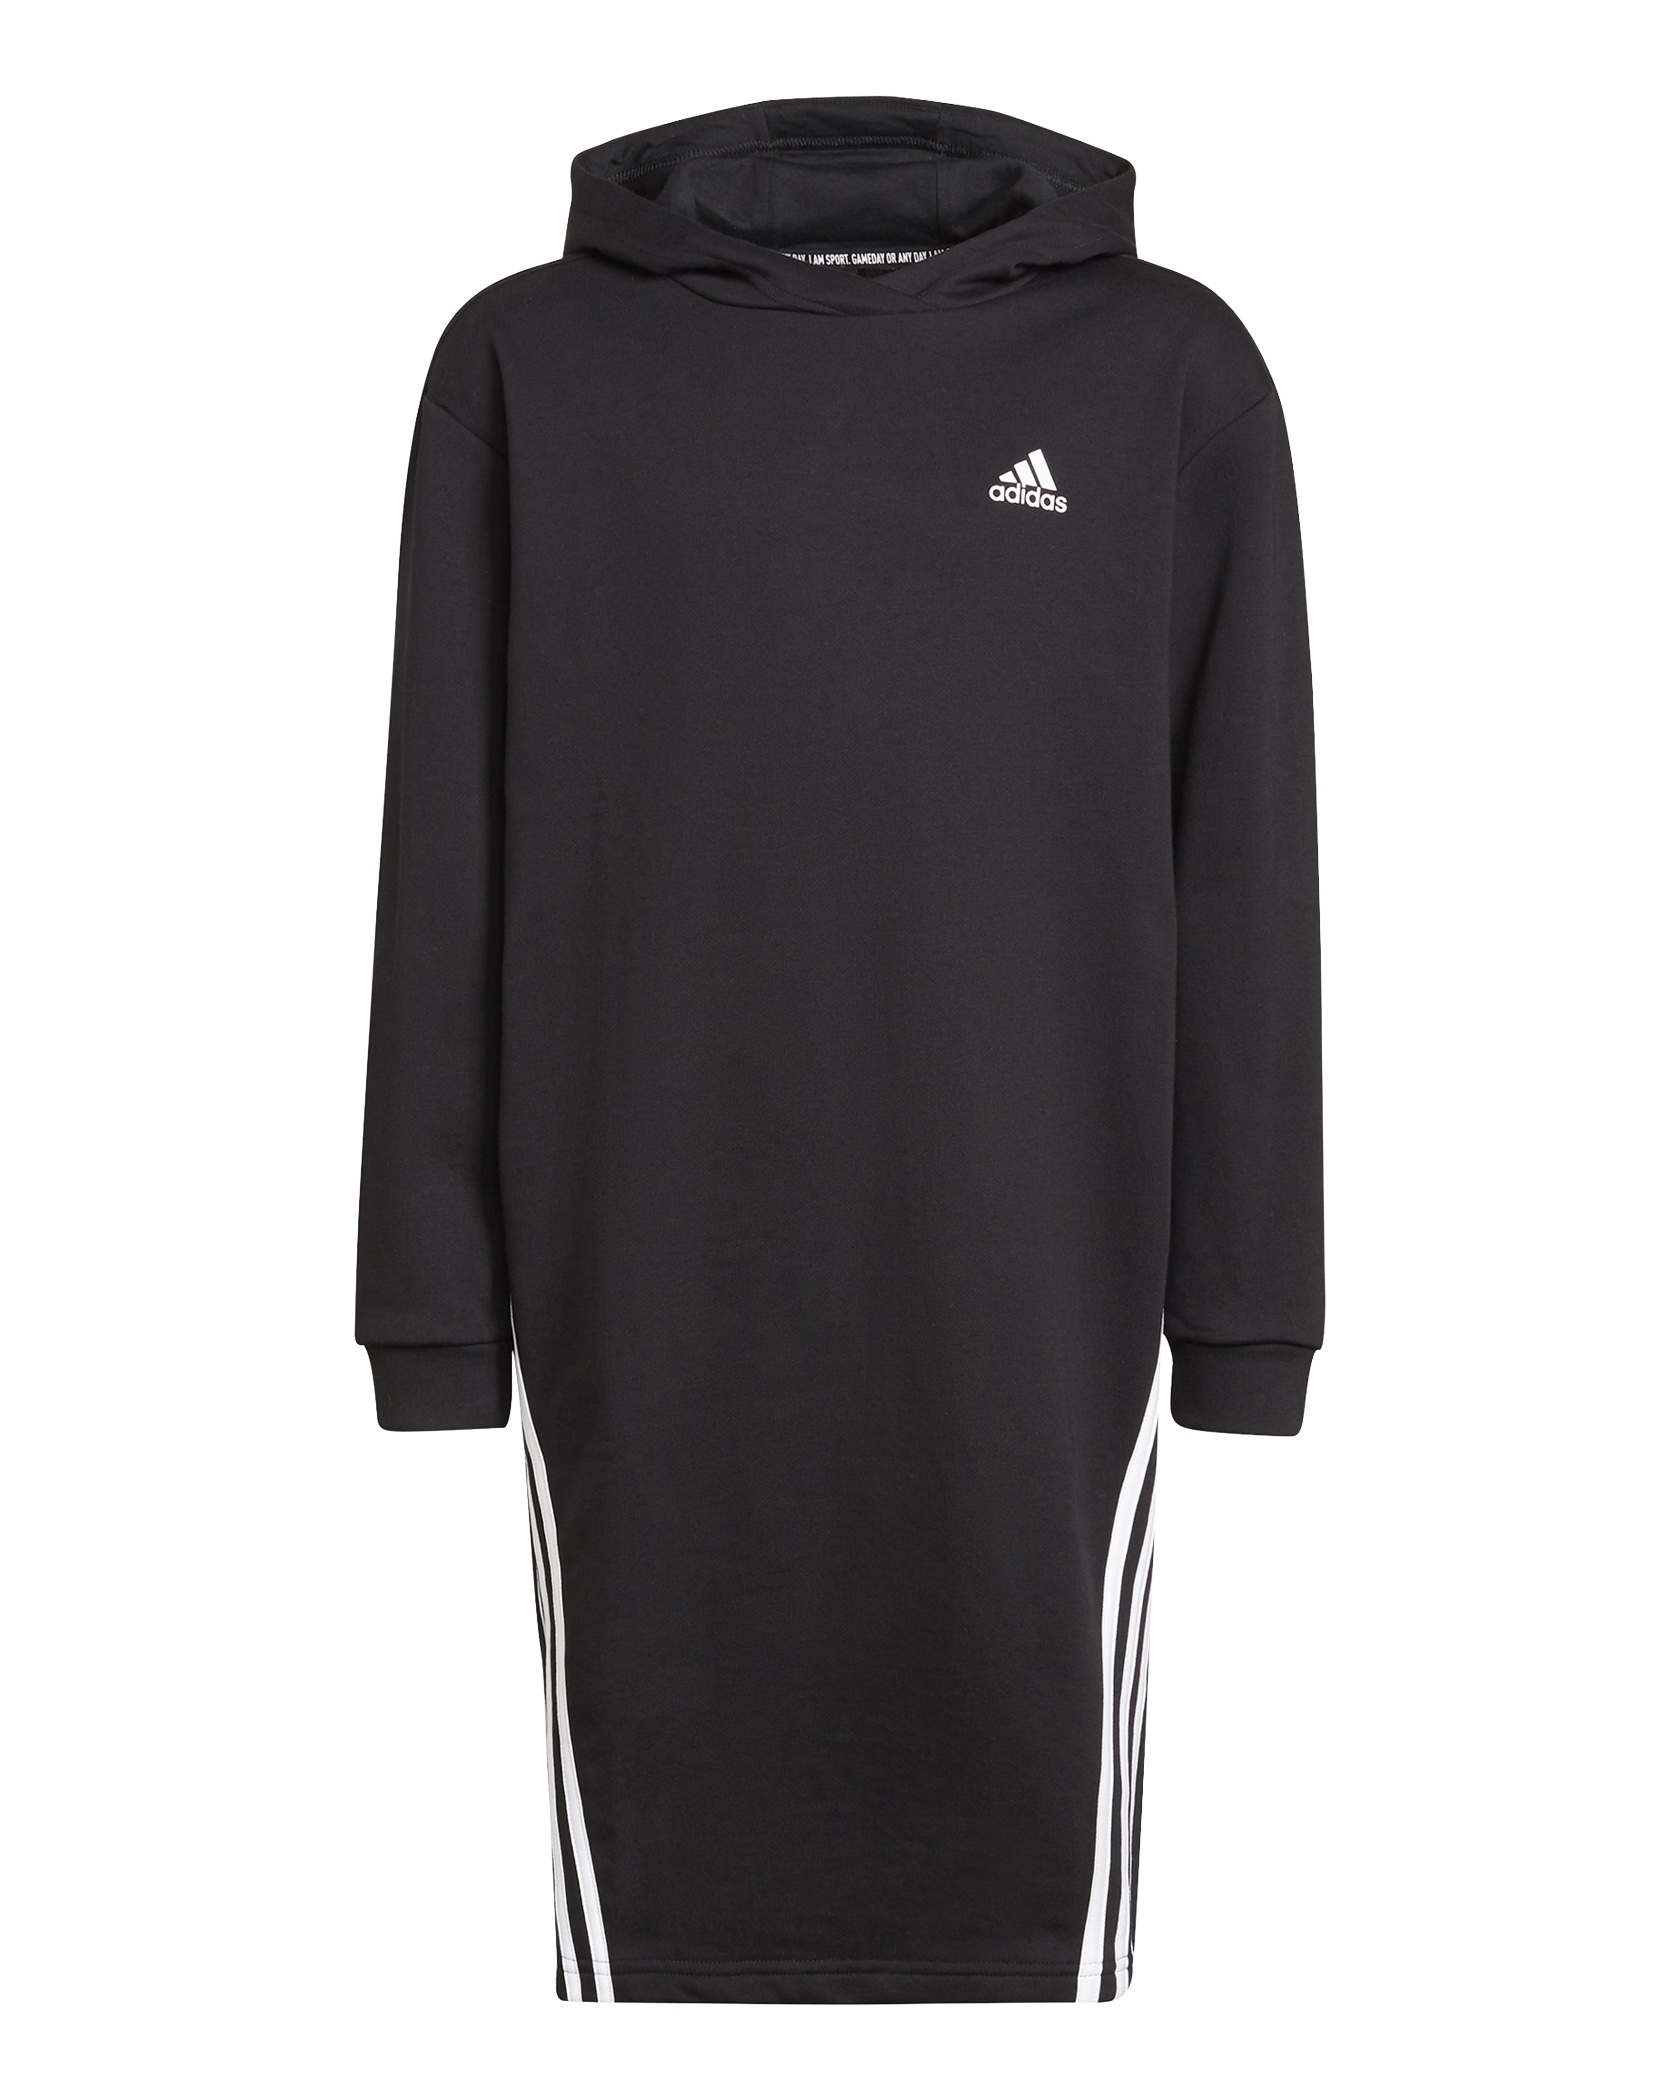 Adidas FIeece 3 Stripes Dress Girl JR Black/White (Storlek 140)